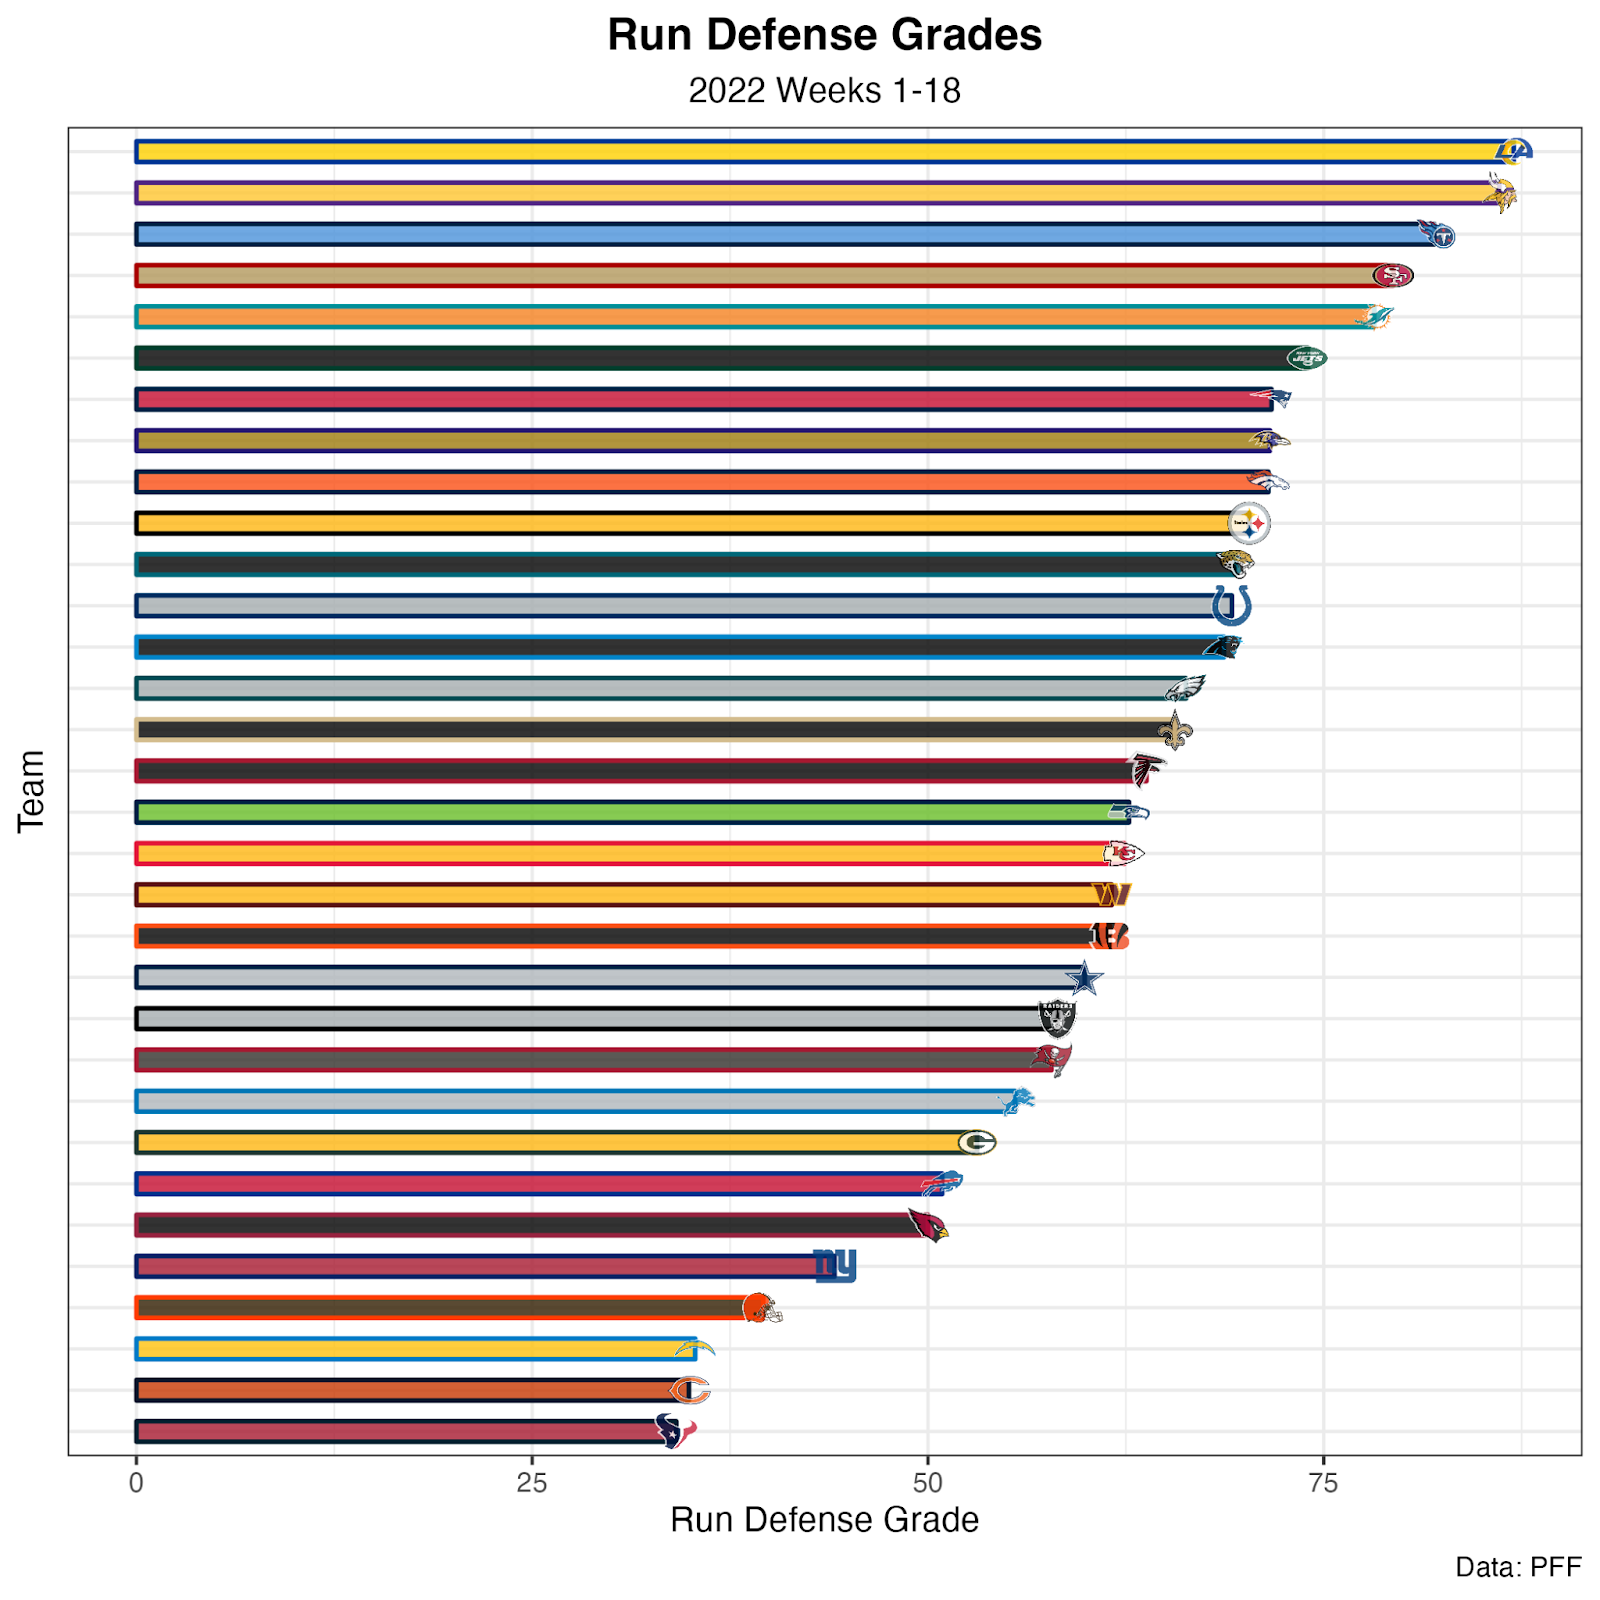 pff team defense rankings